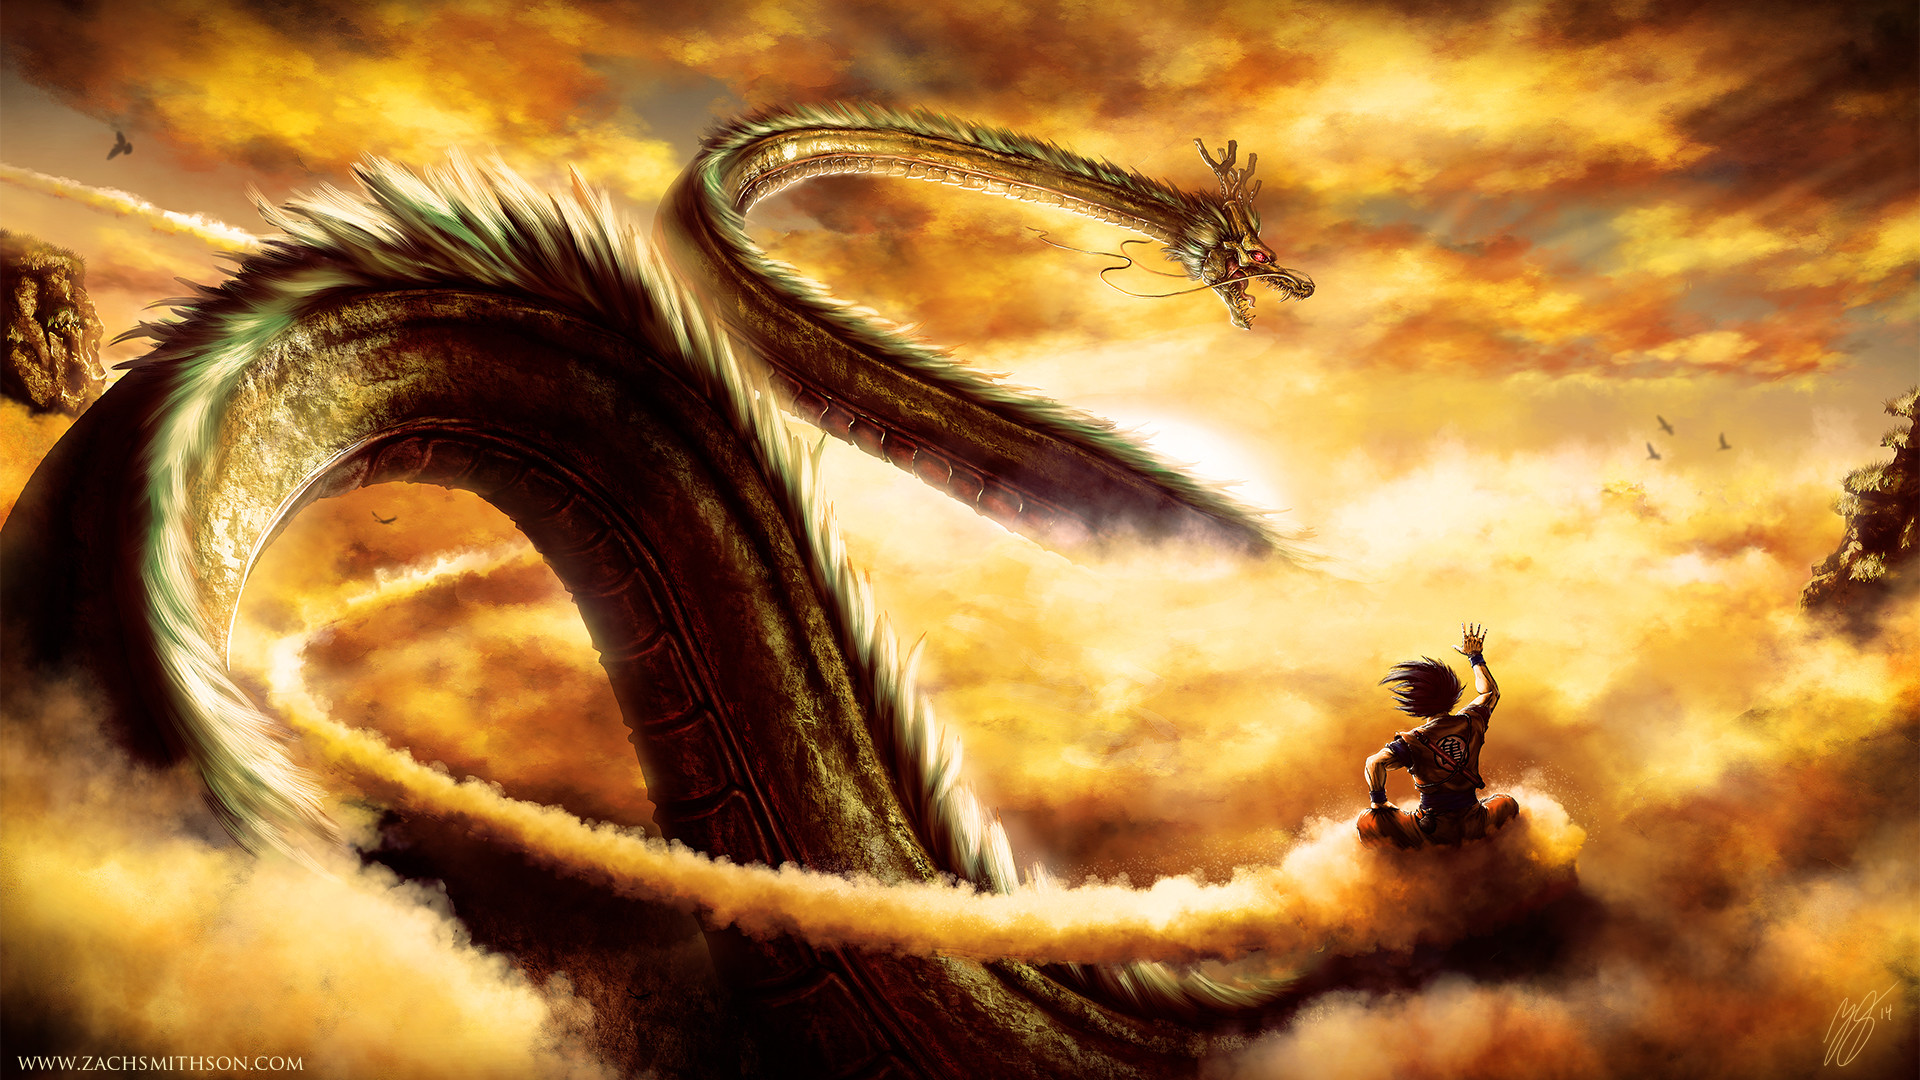 dragon ball super wallpaper,cg artwork,dragon,mythology,fictional character,macro photography